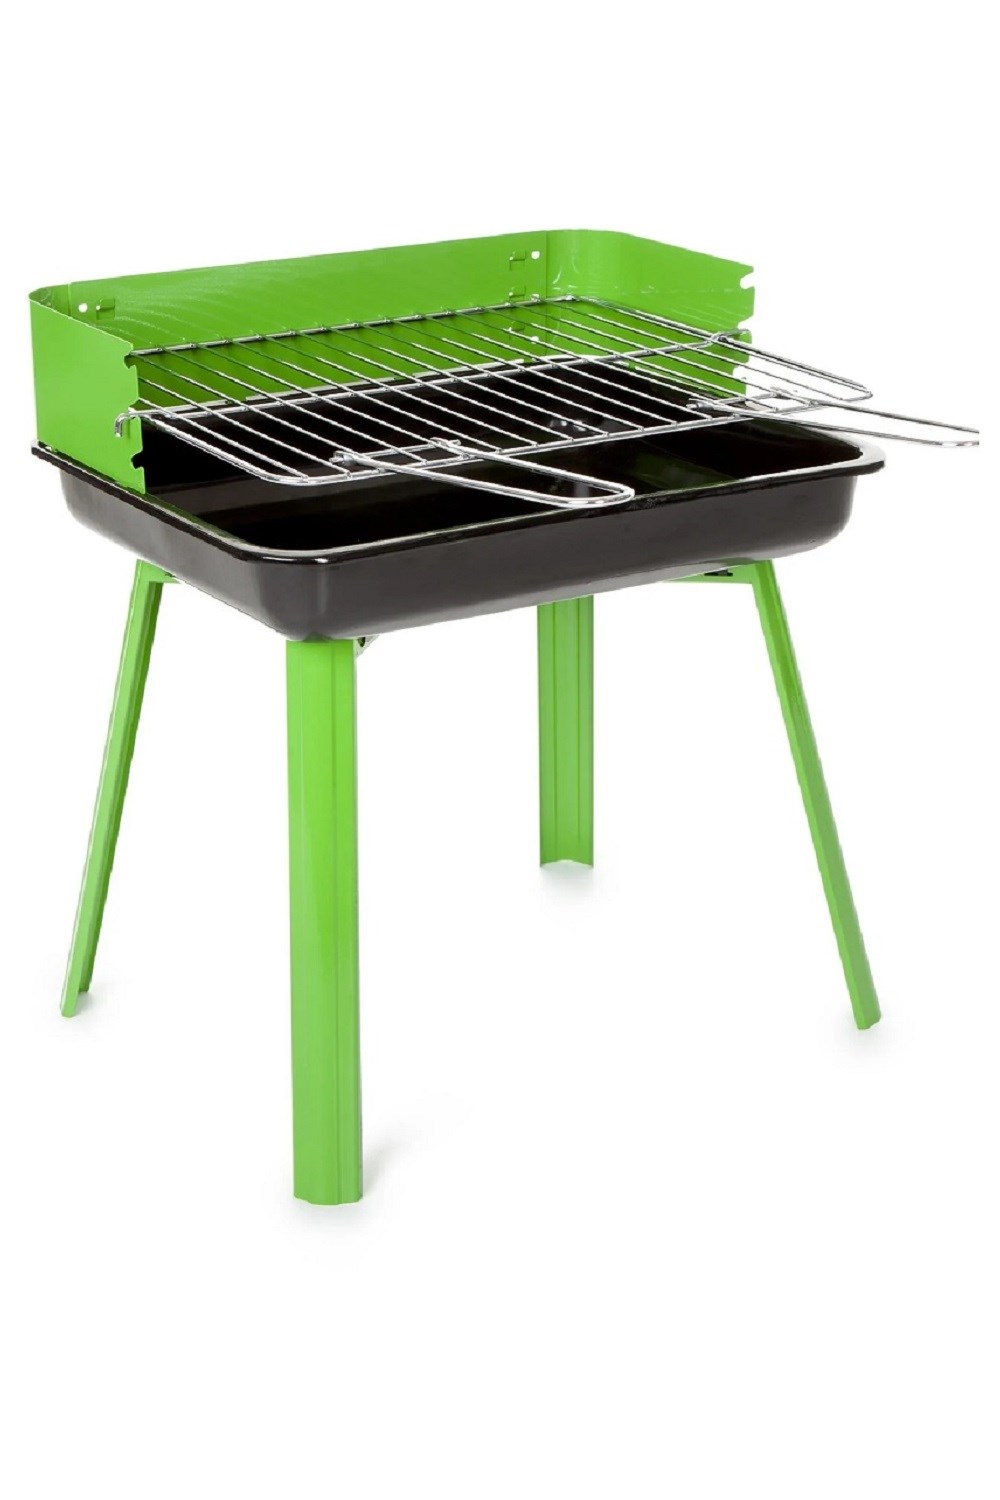 PortaGo Portable Charcoal Barbecue -